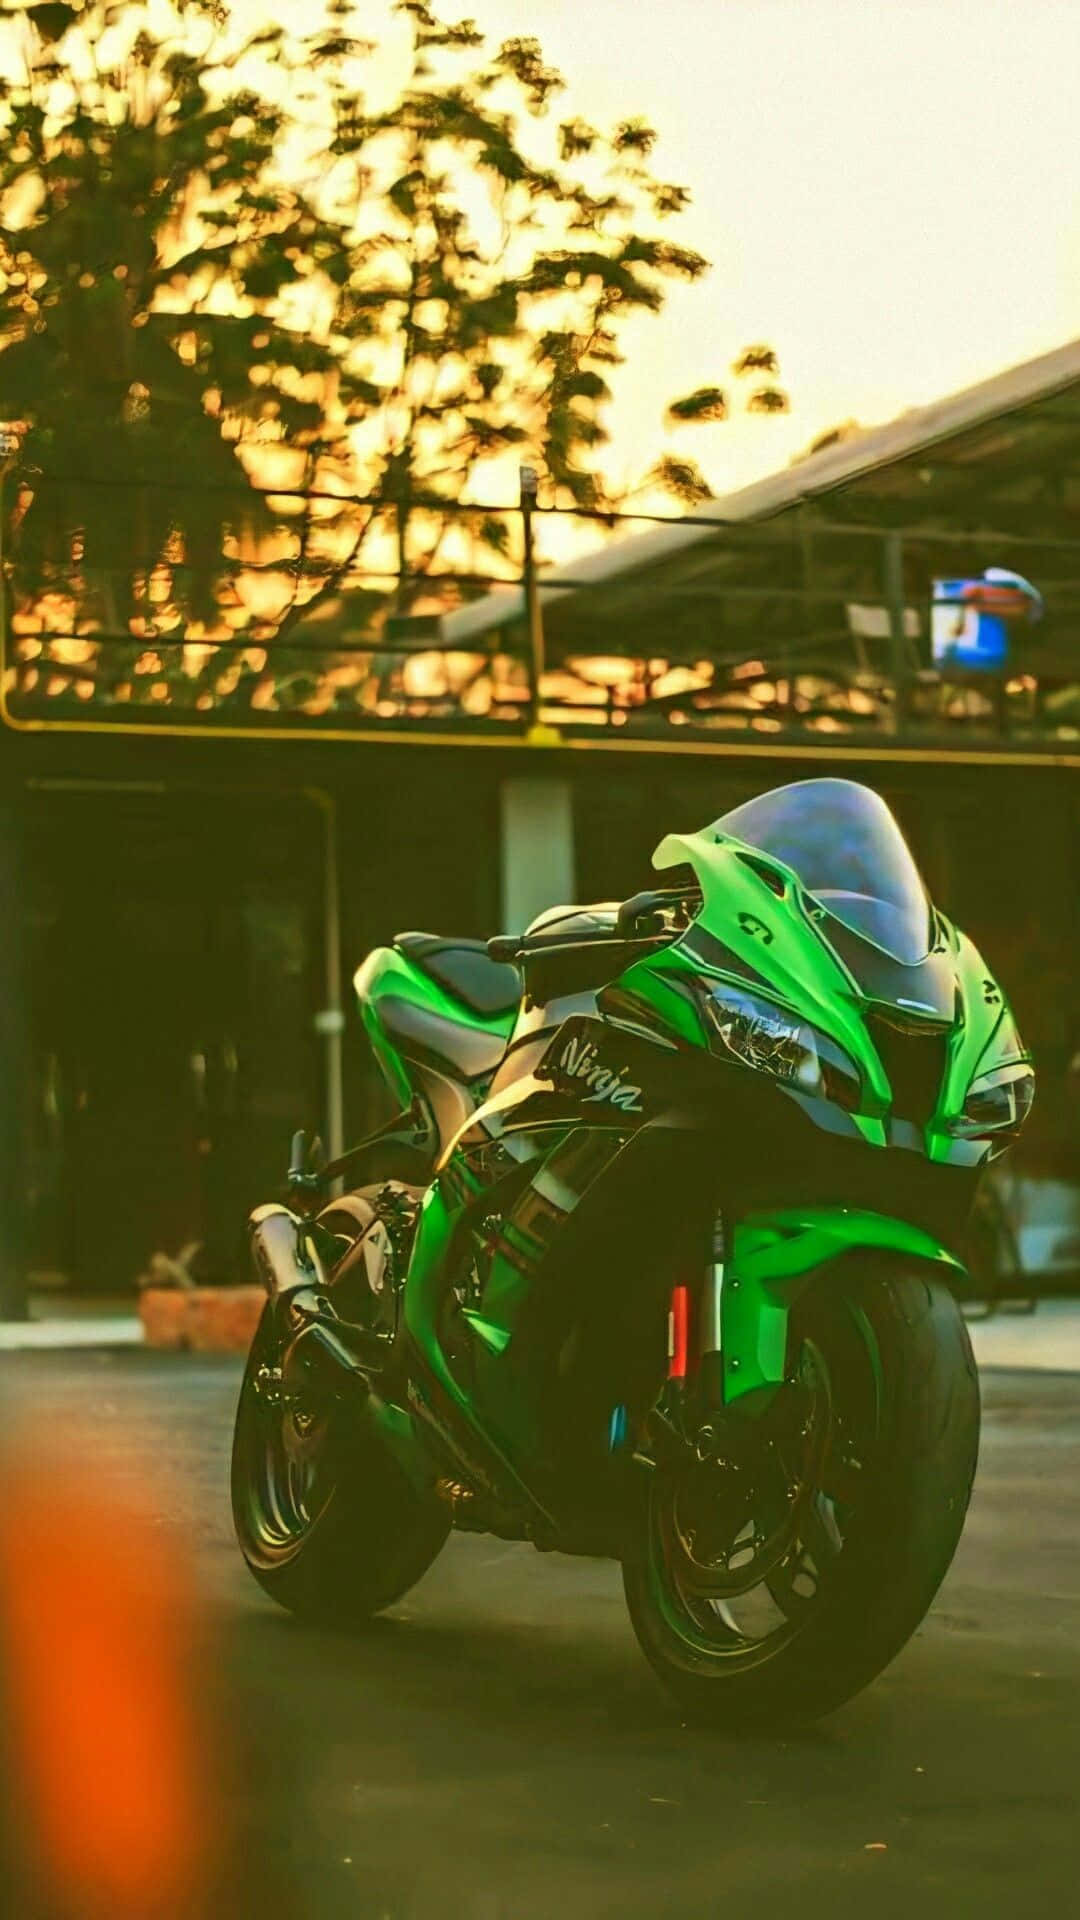 Motorcycle Iphone Kawasaki Ninja Green Wallpaper